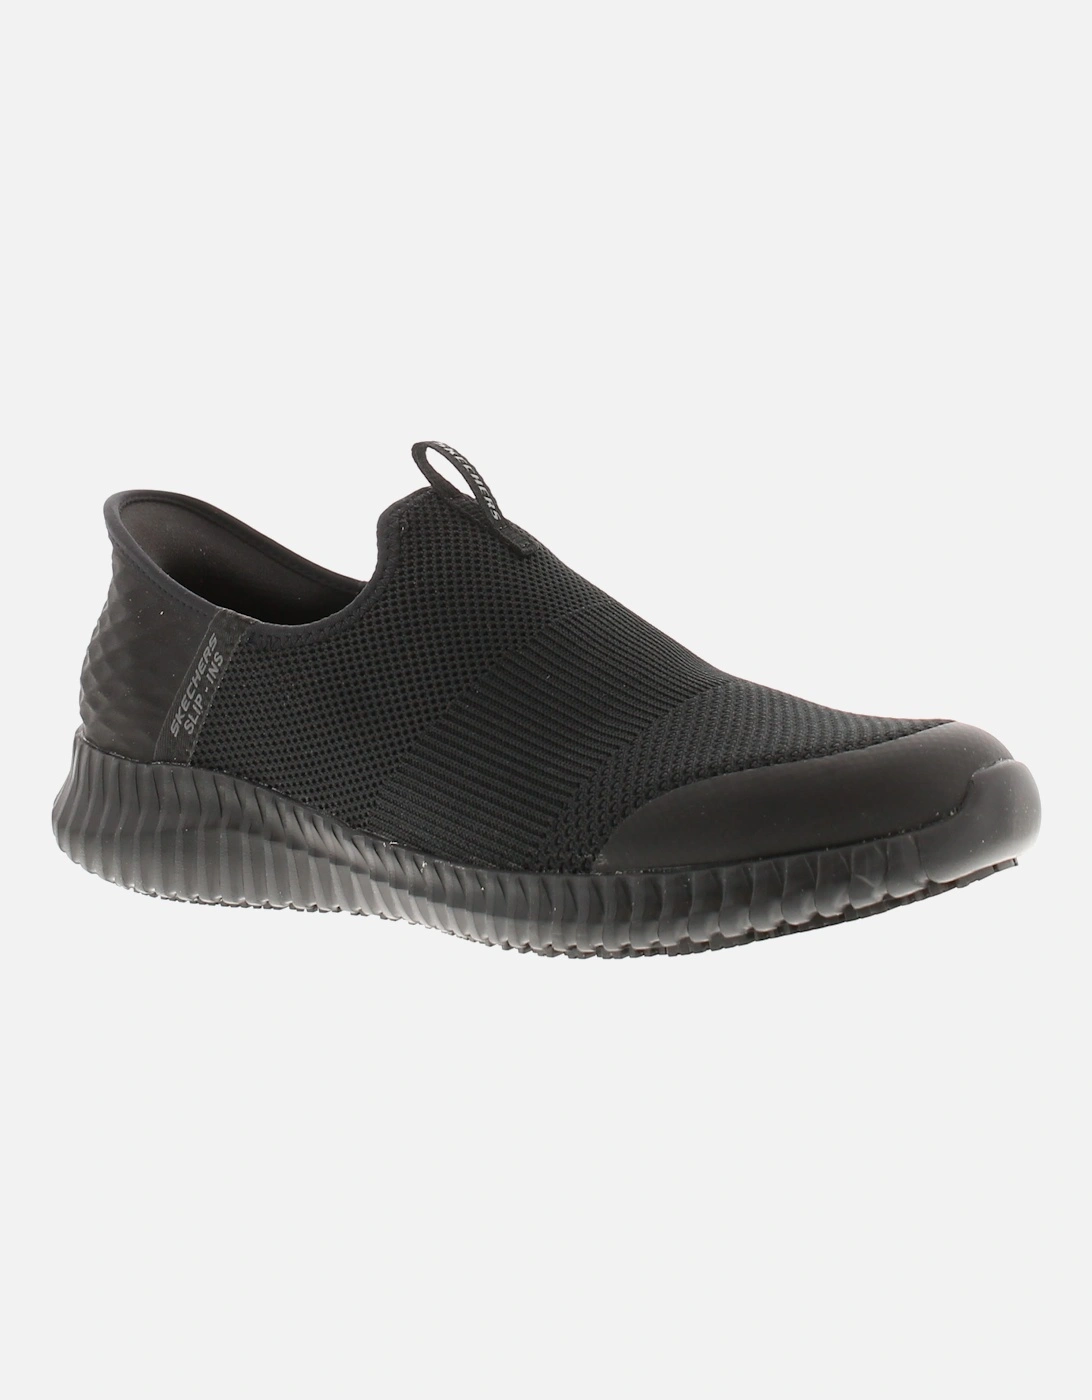 Womens Safety Shoes Trainers Cessnock Gwynedd Slip On Black UK Size 5, 6 of 5